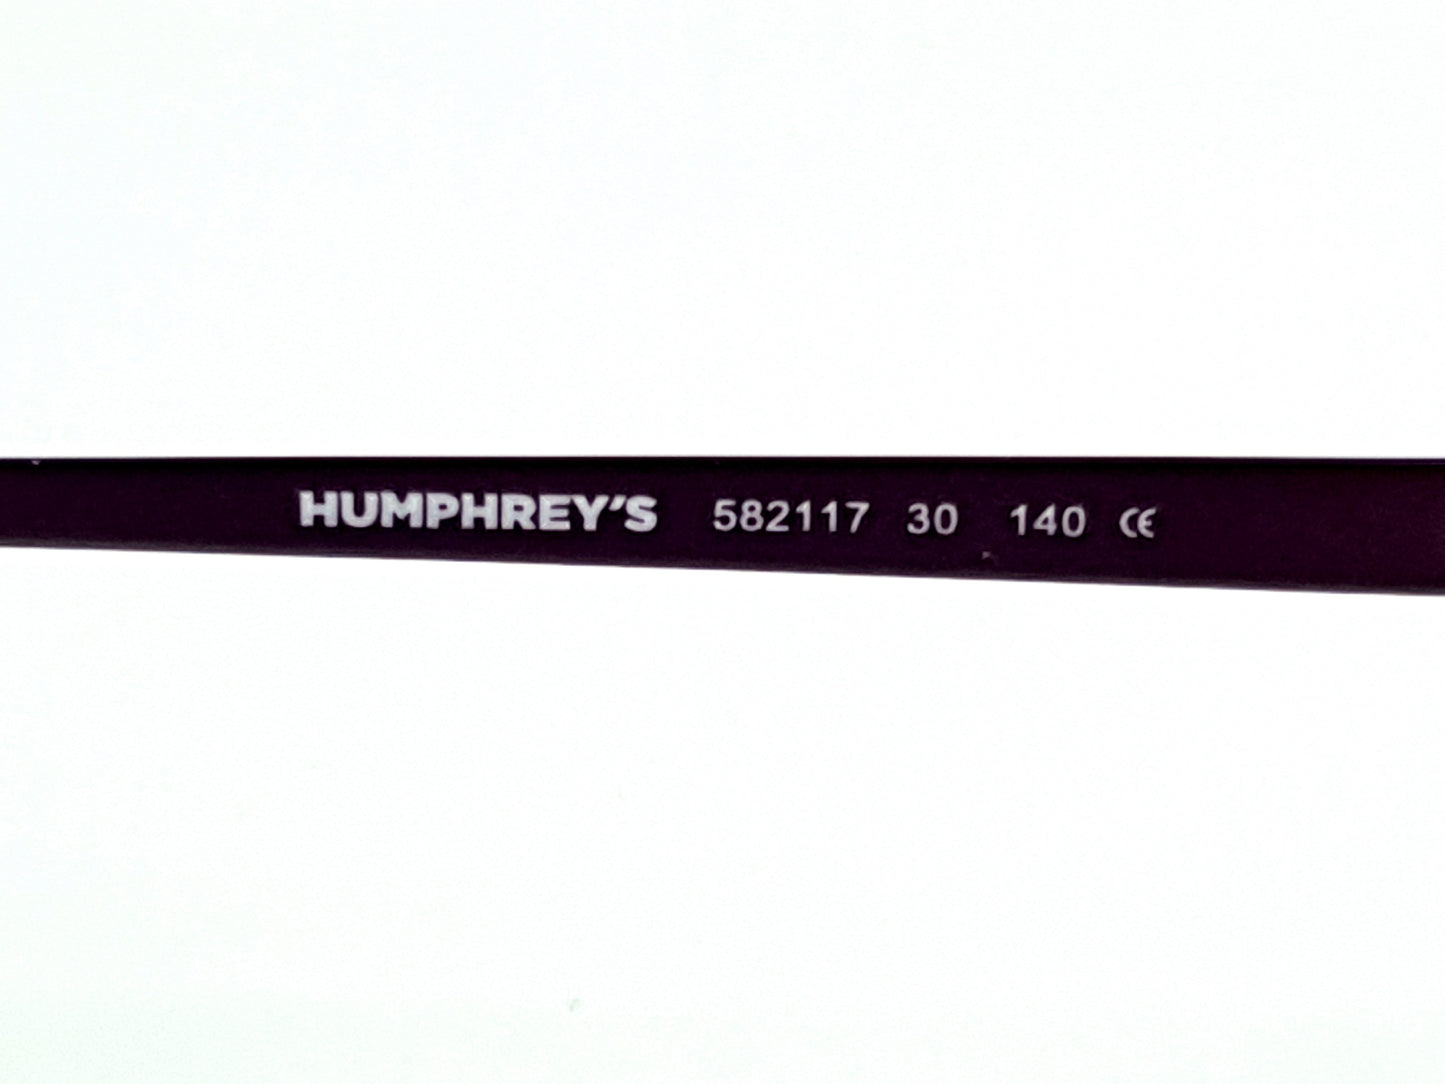 HUMPHREY'S ESCHENBACH 582117